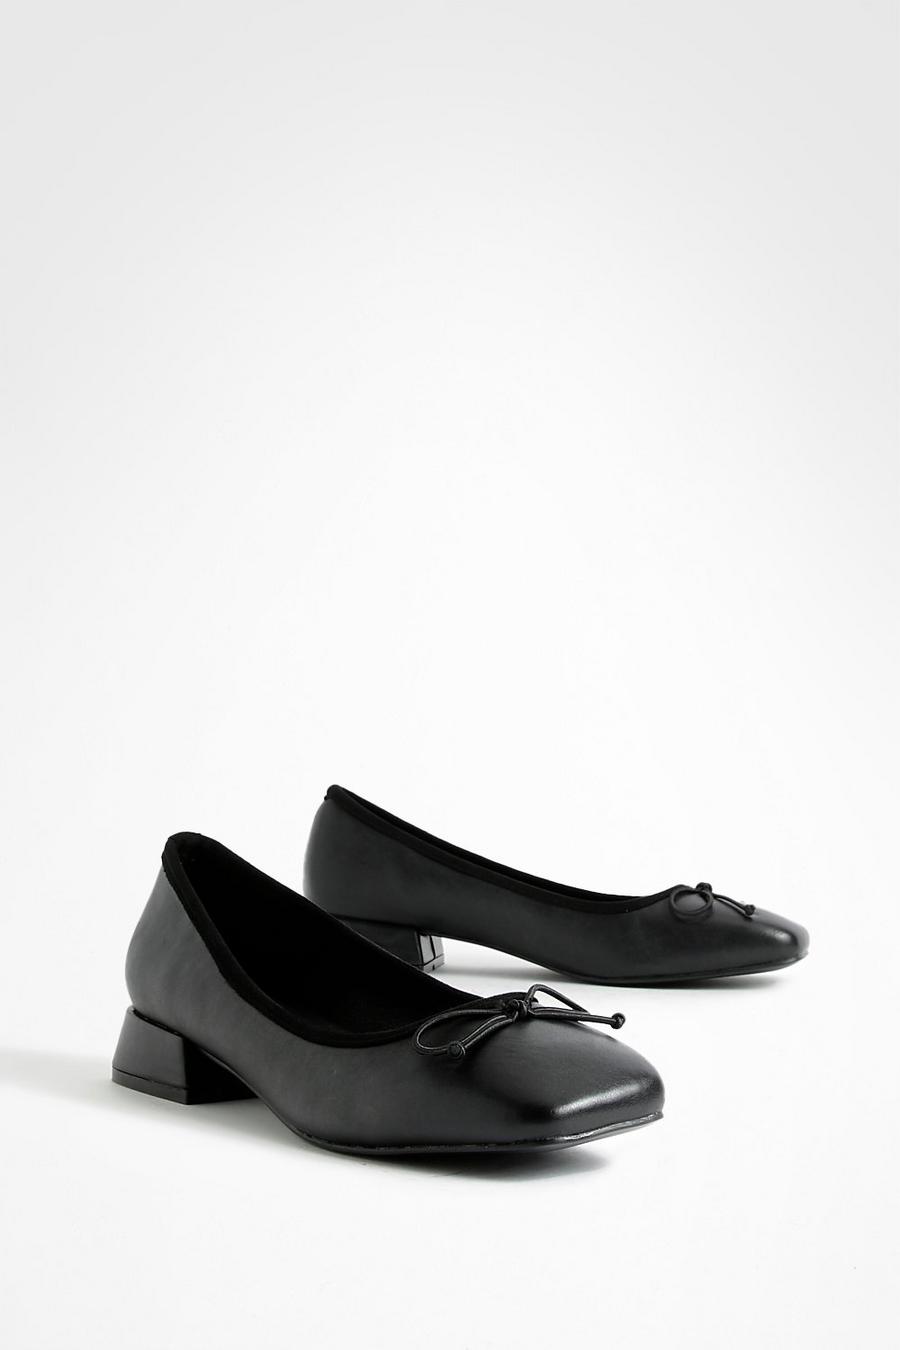 Black Square Toe Ankle Strap Heeled Ballet Flats 